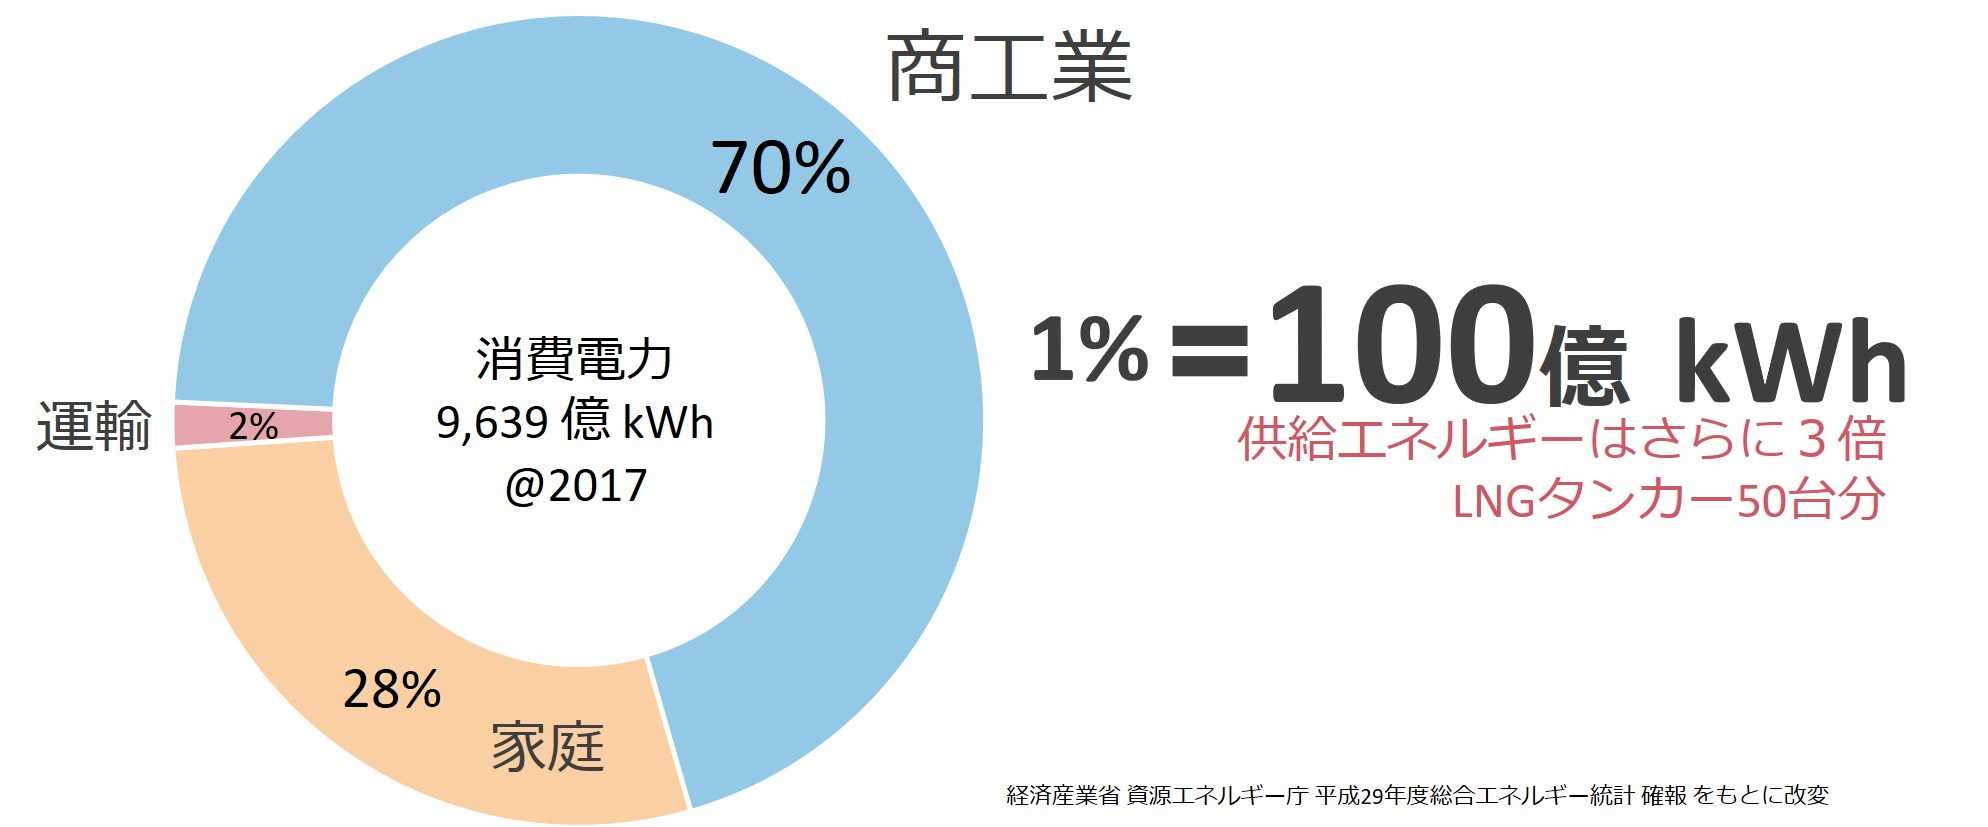 日本の消費電力の用途内訳